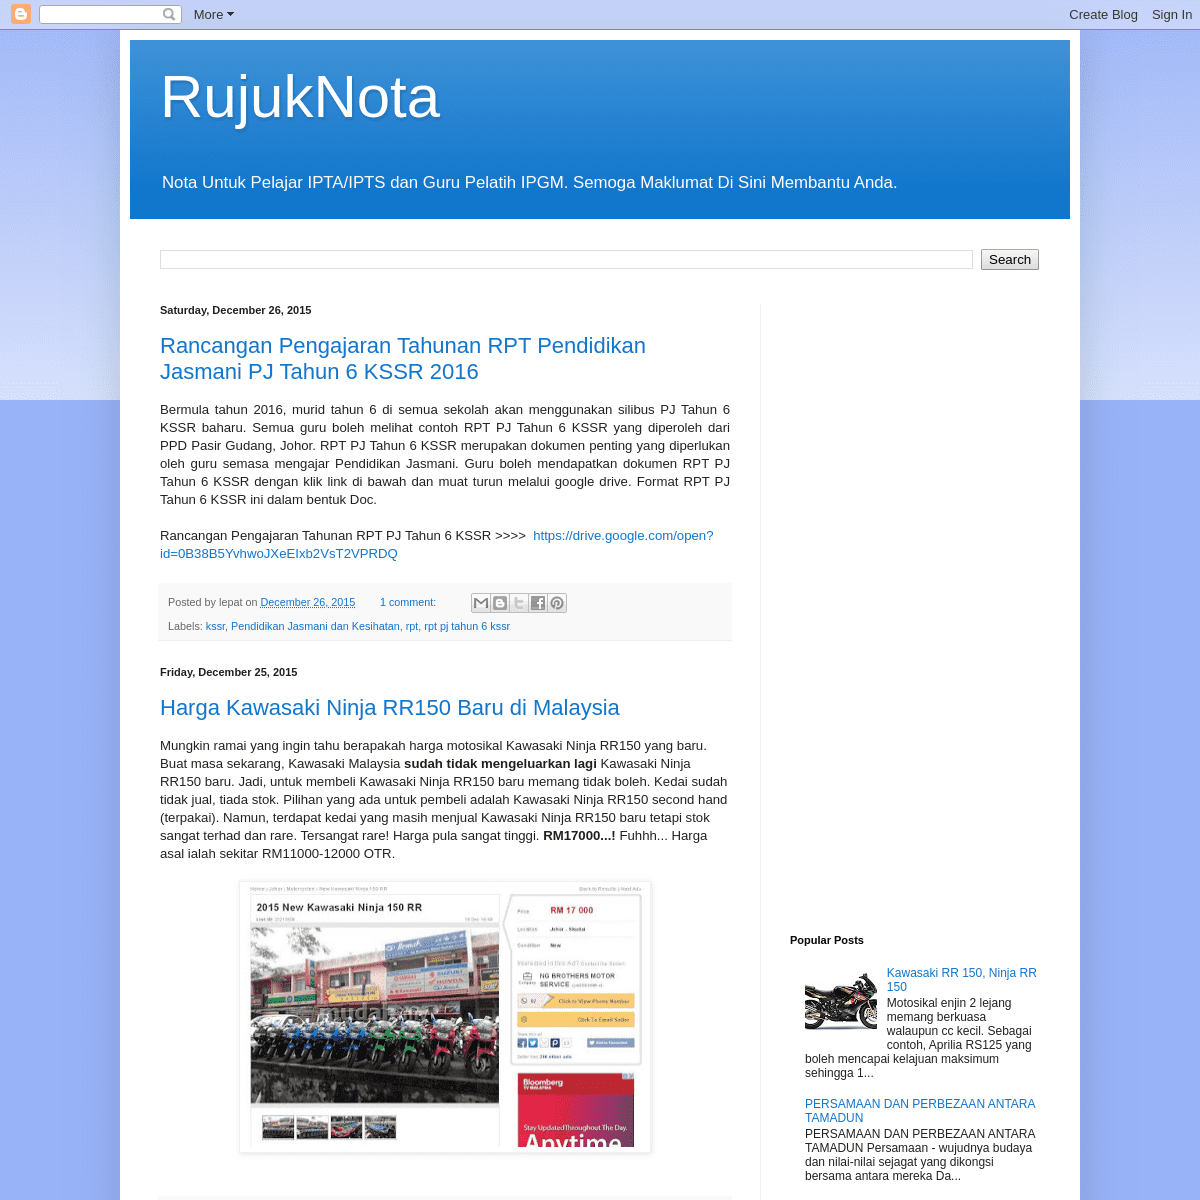 A complete backup of rujuknota.blogspot.com